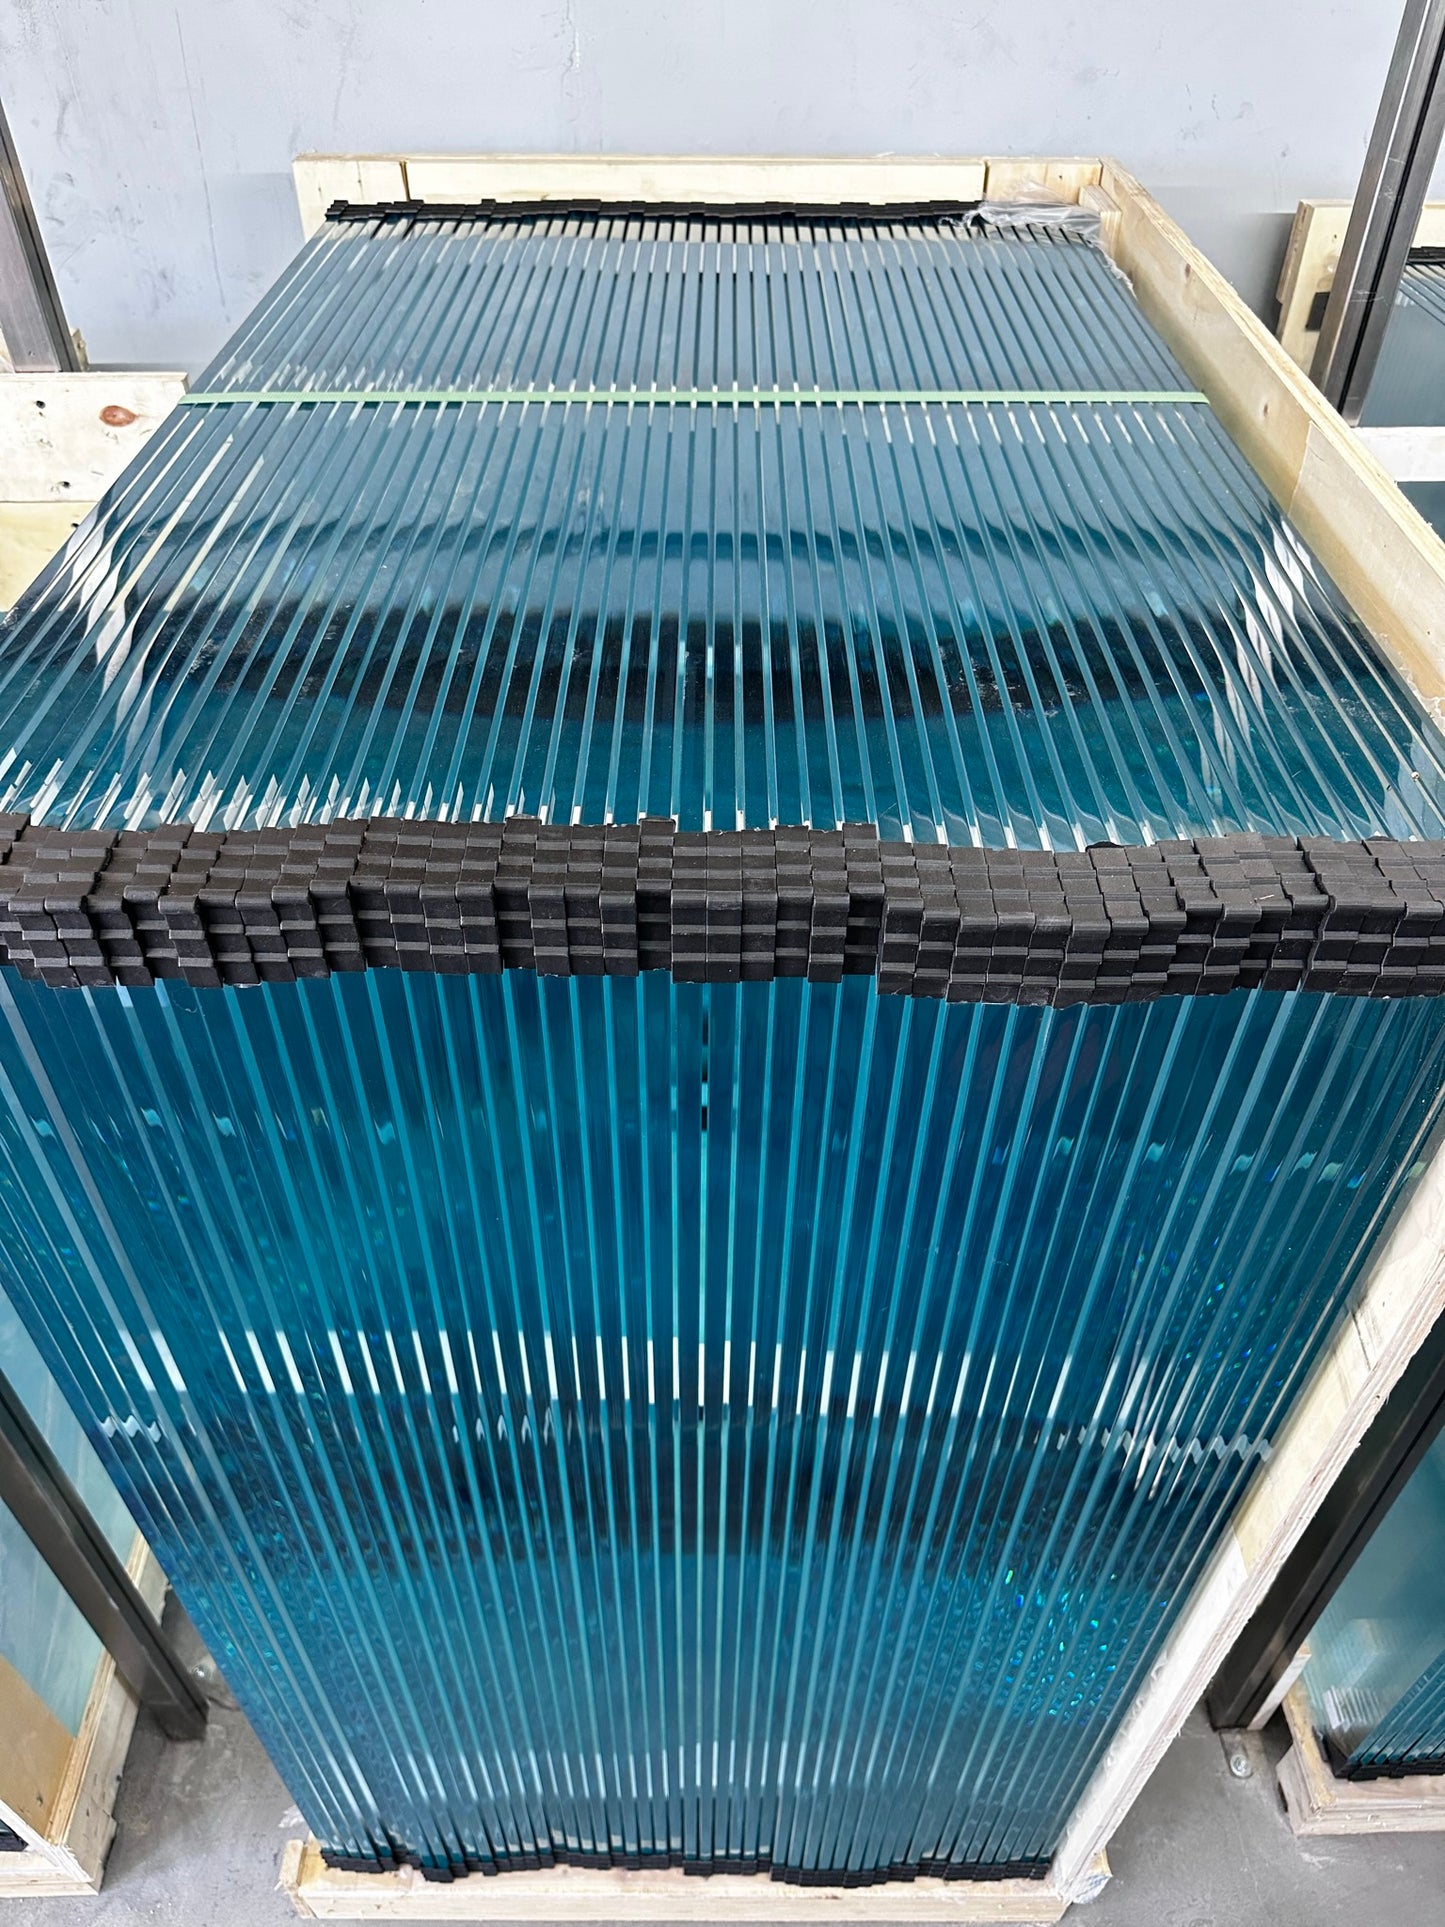 1/2" Clear Tempered Railing Glass Panel Flat Polished 42" High - SHEMONICO